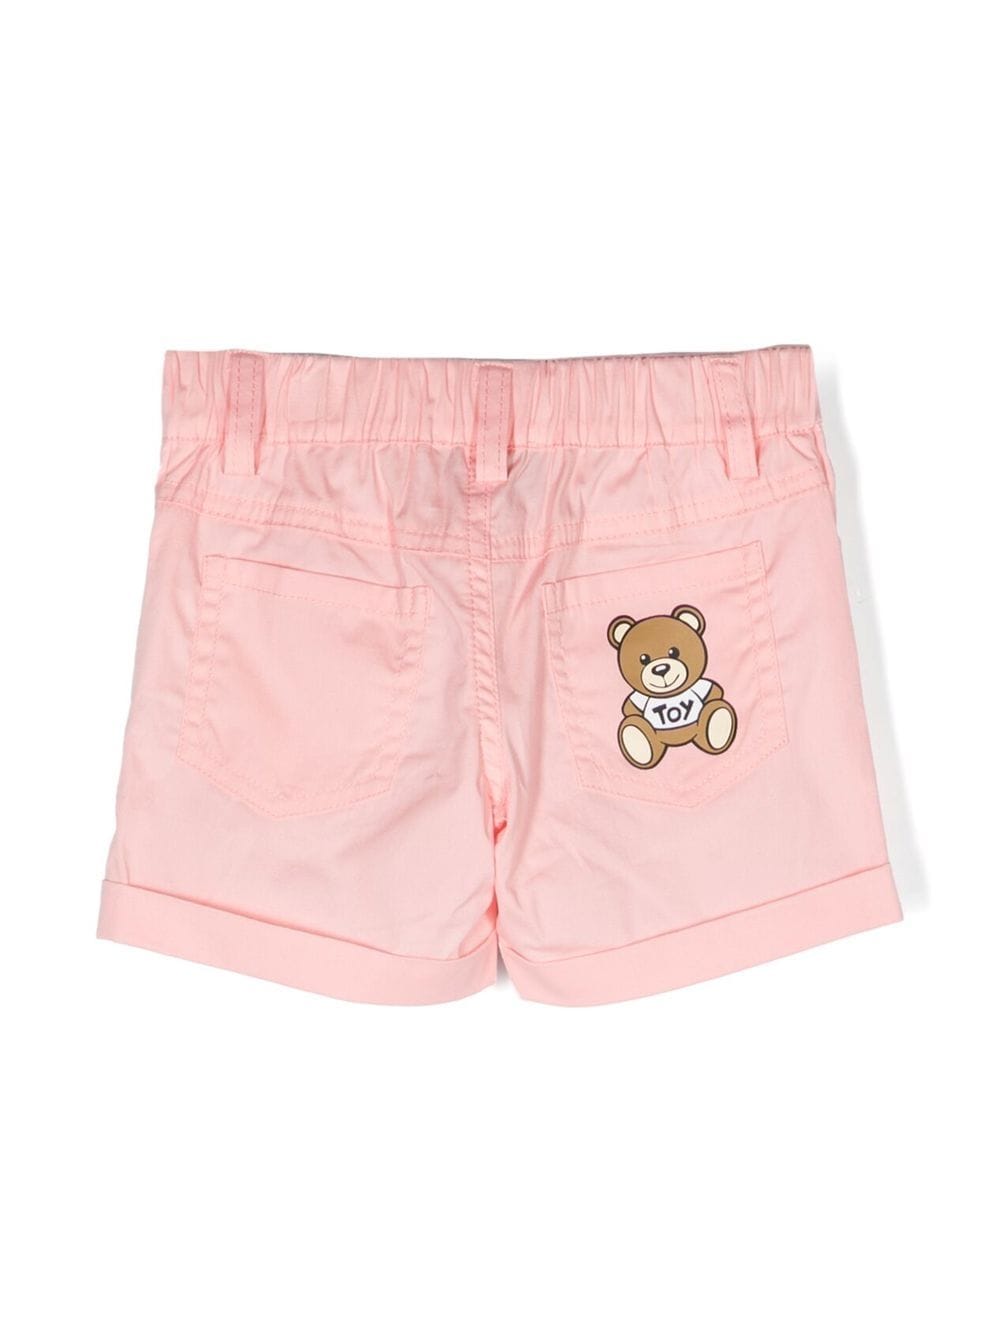 Teddy bear shorts